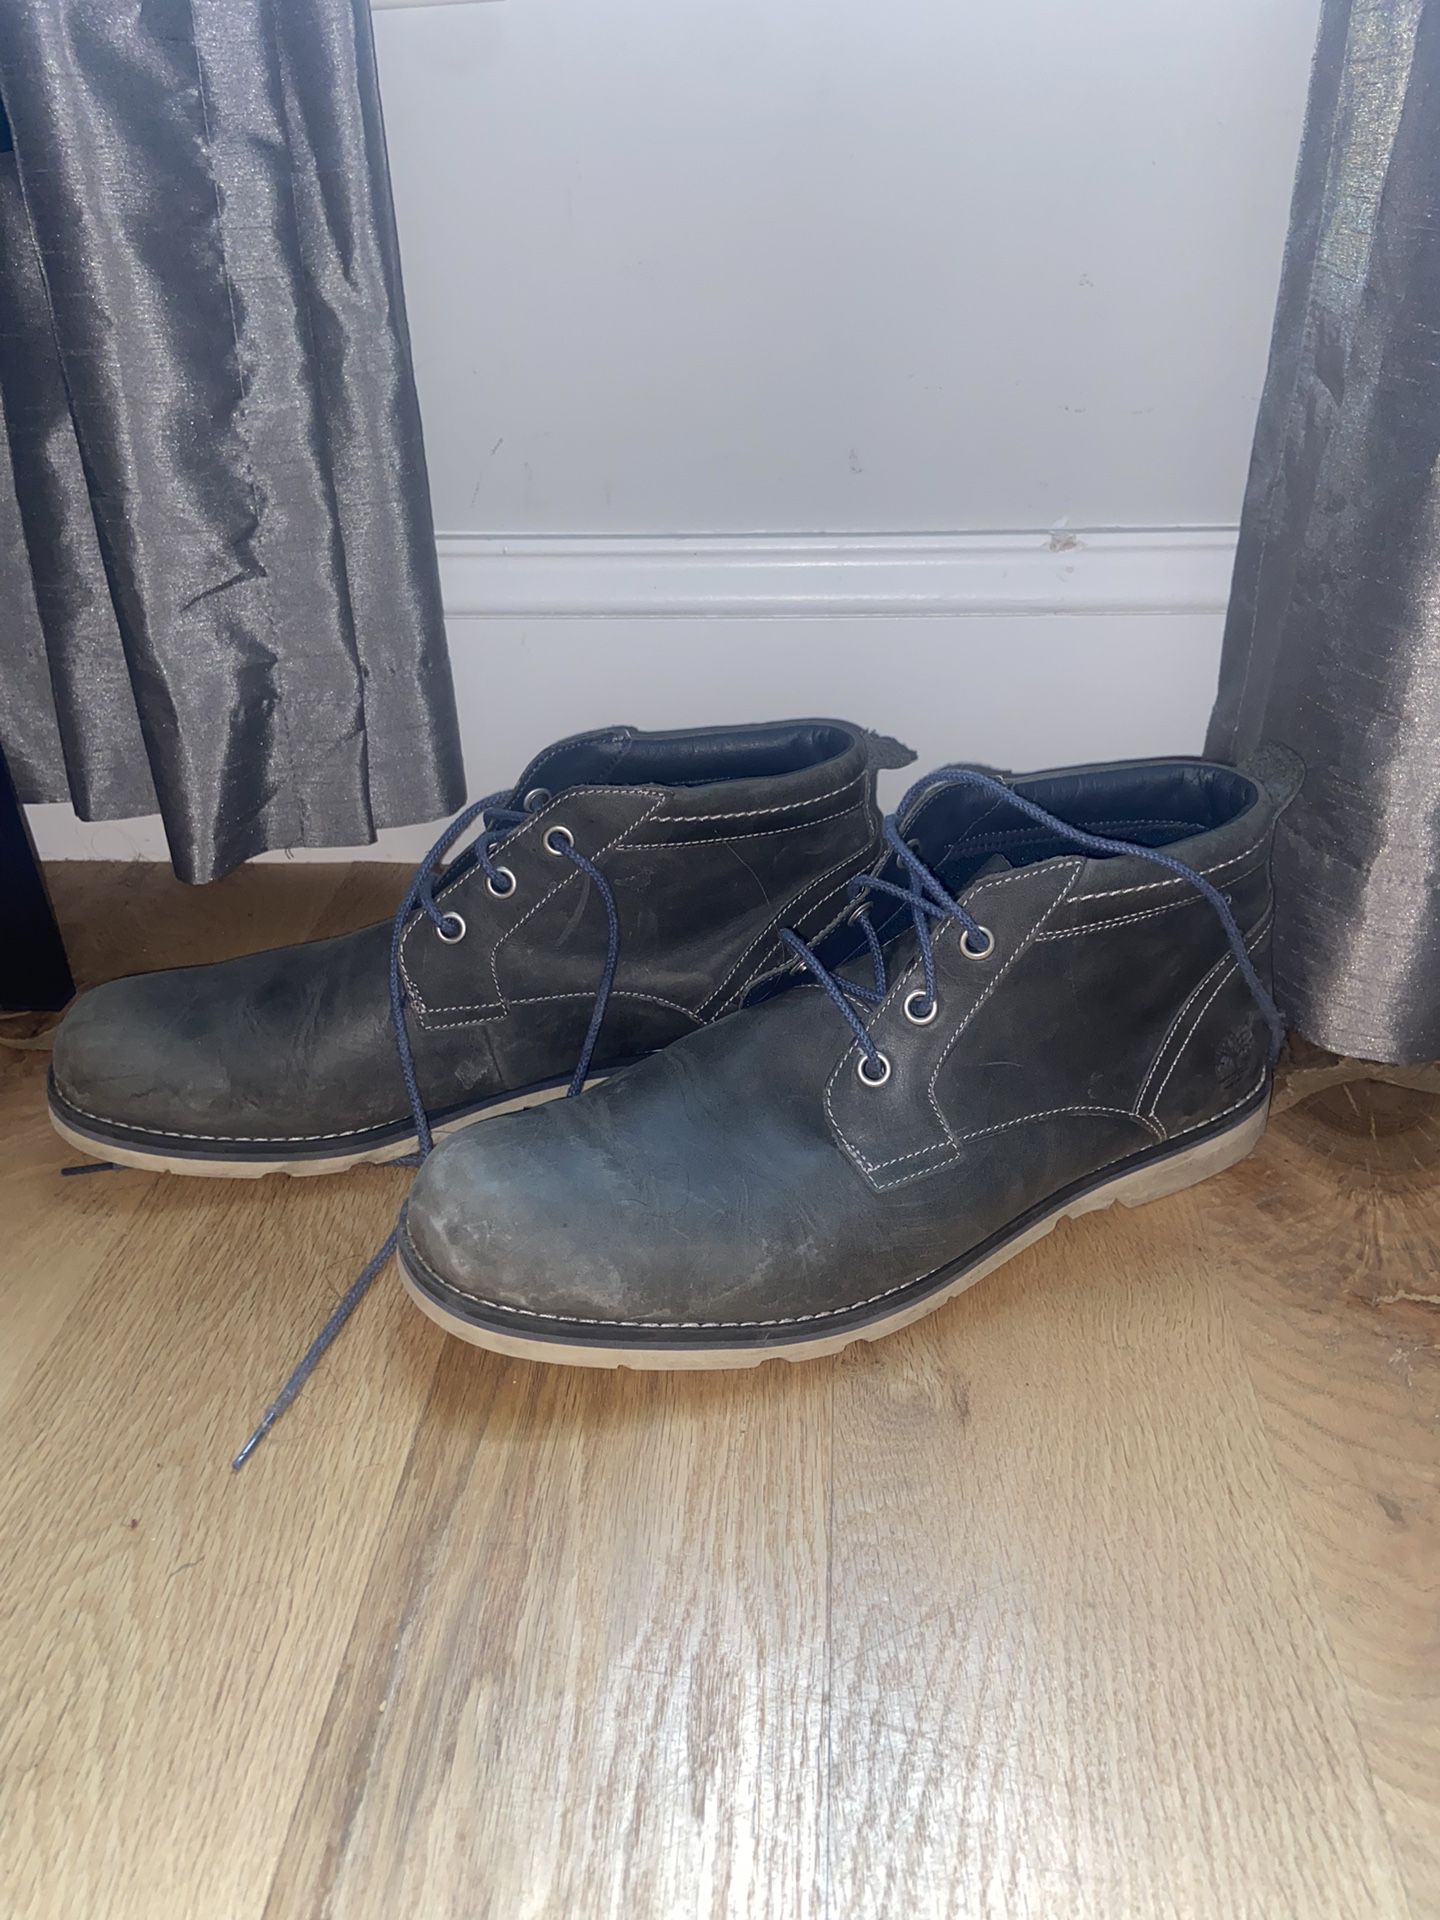 Timberland Boots Size 12.5